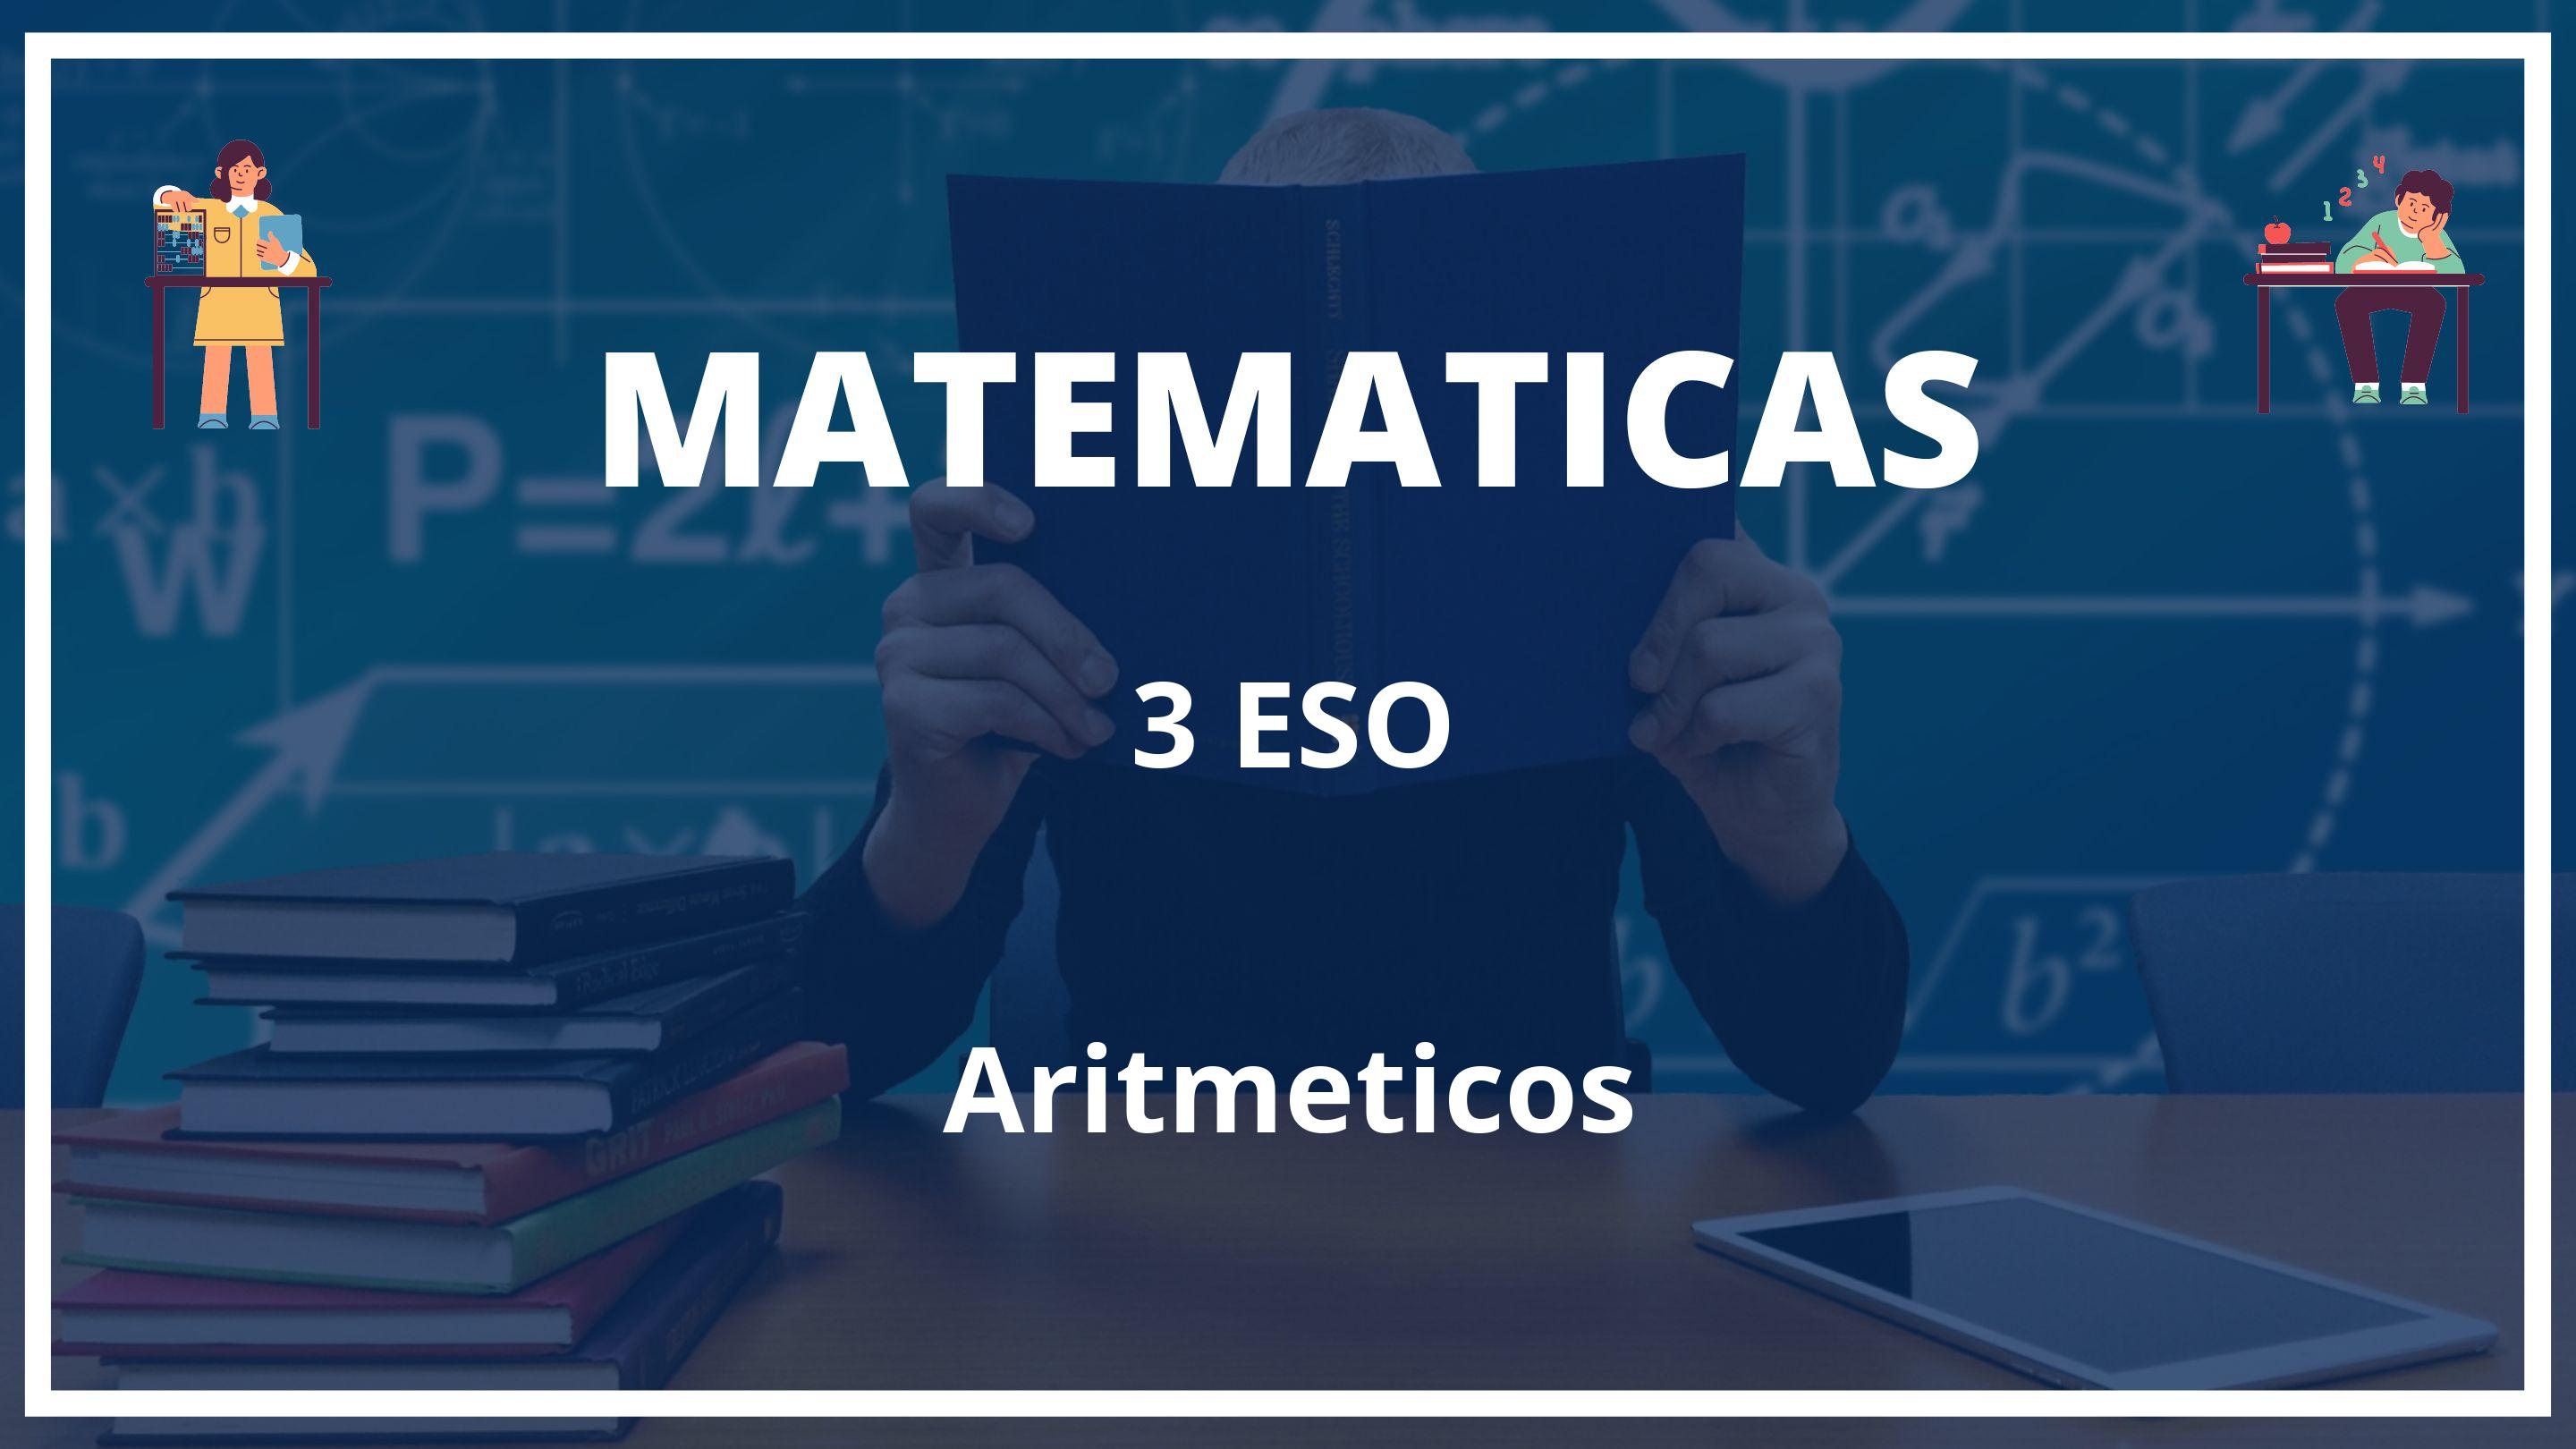 Aritmeticos 3 ESO